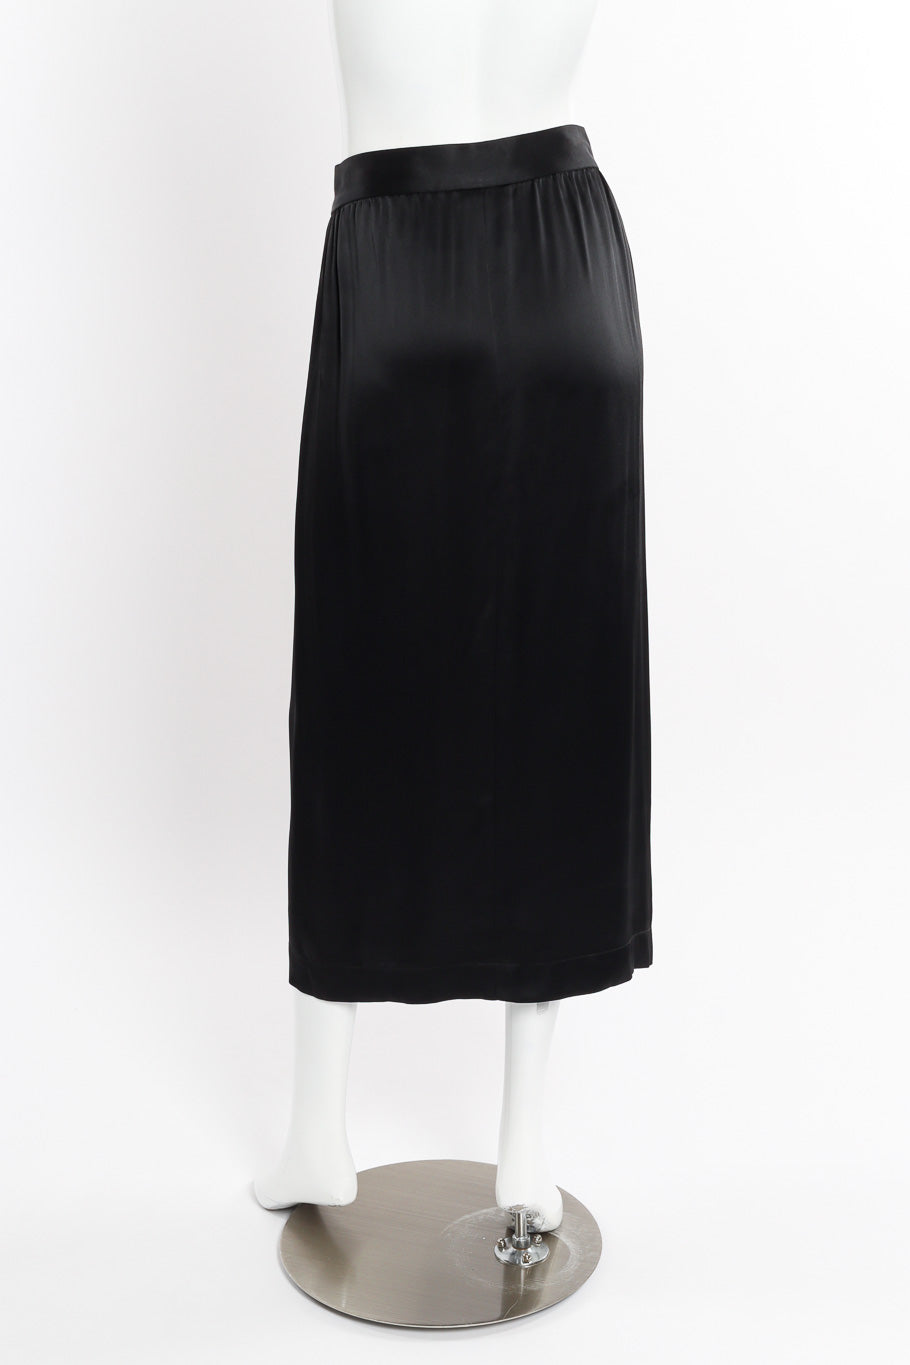 Vintage Yves Saint Laurent Wrap Midi Skirt back view on mannequin @recessla